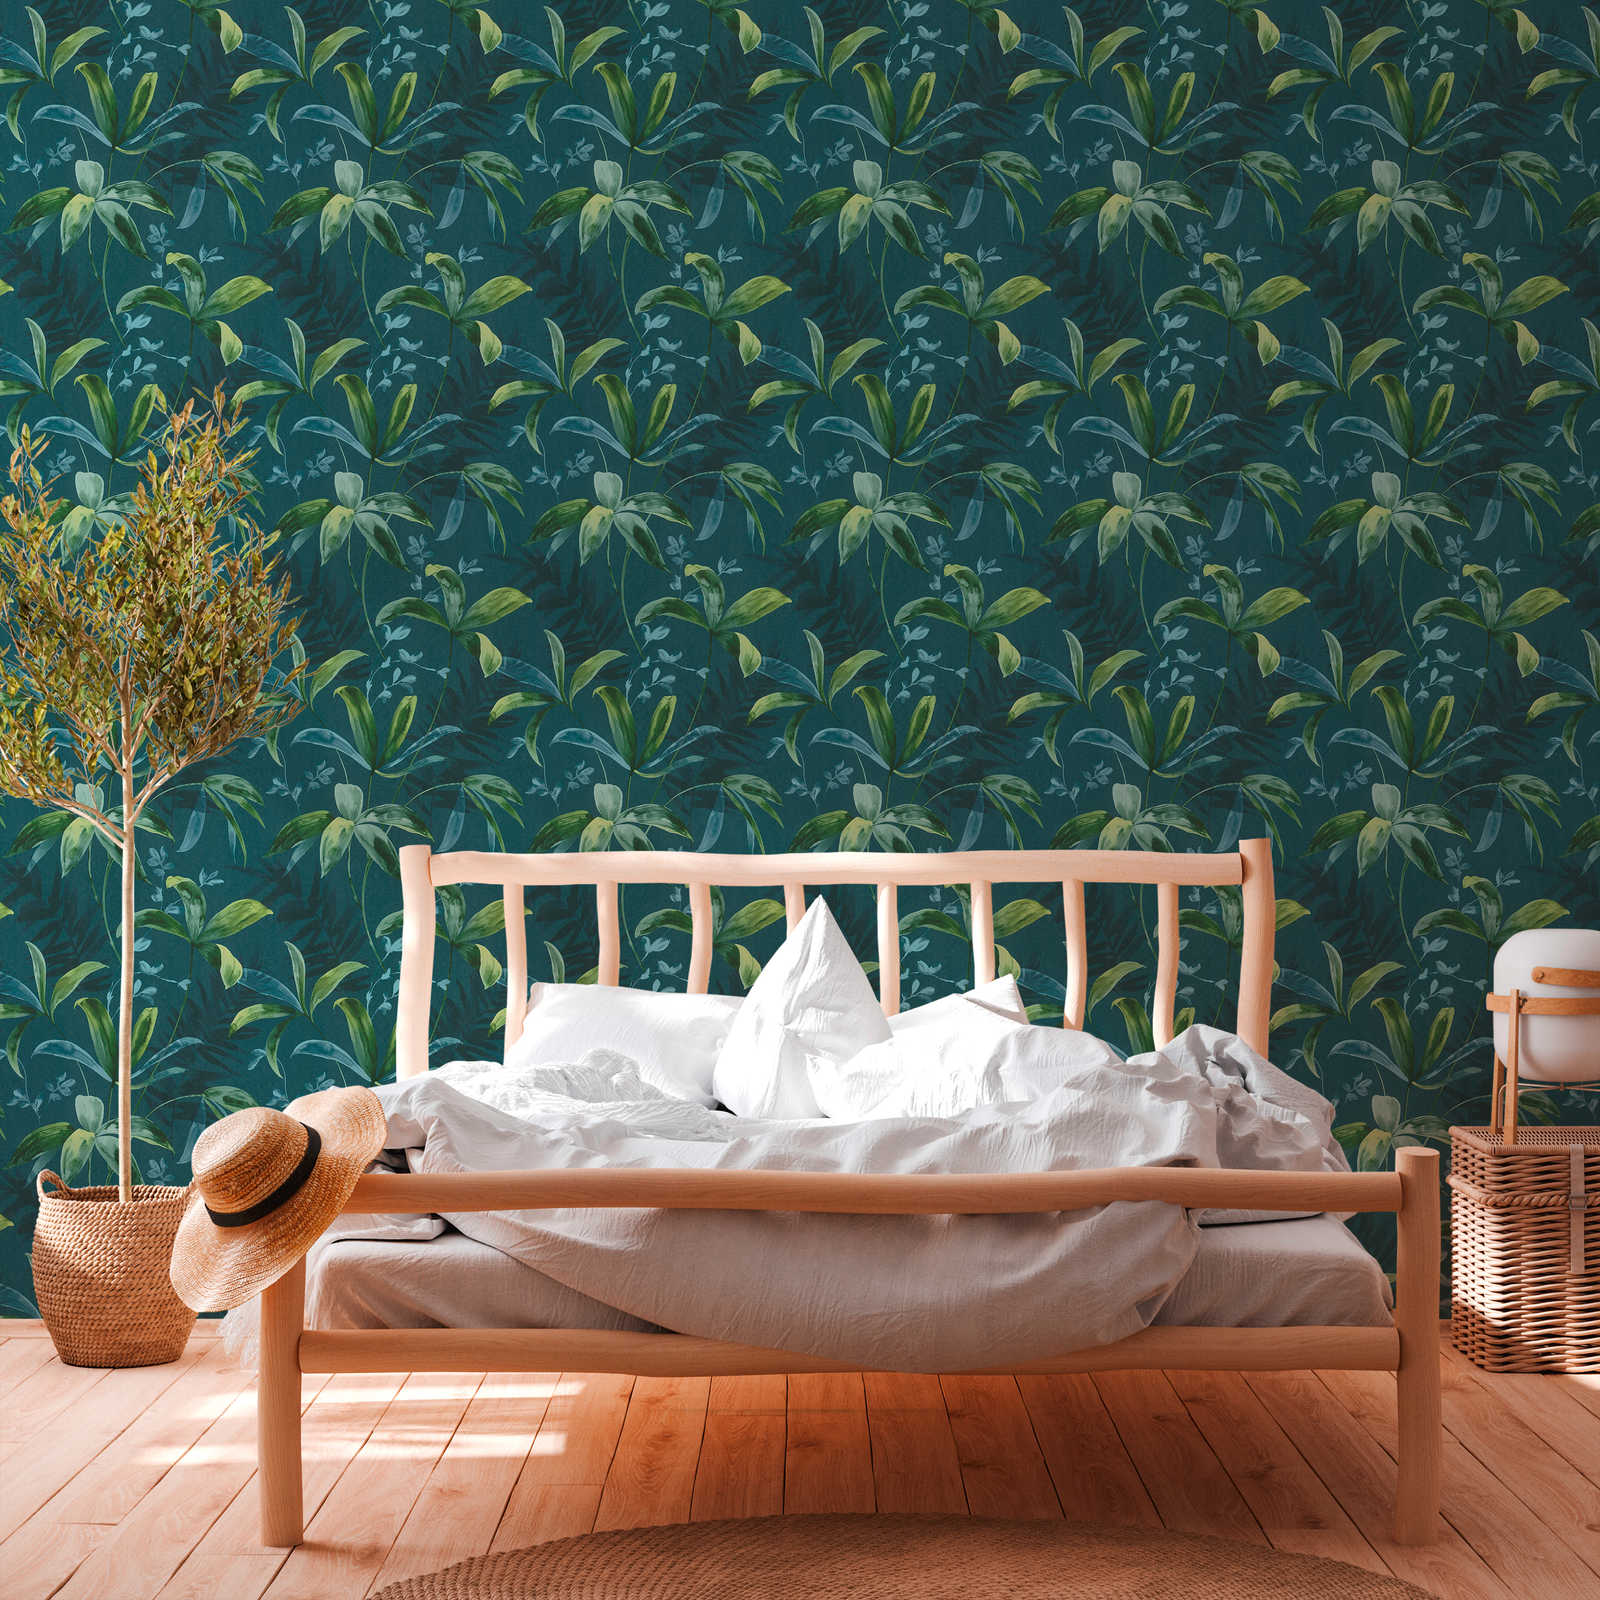             Dunkelgrüne Tapete mit Blätter Muster im Aquarell Stil – Blau, Grün
        